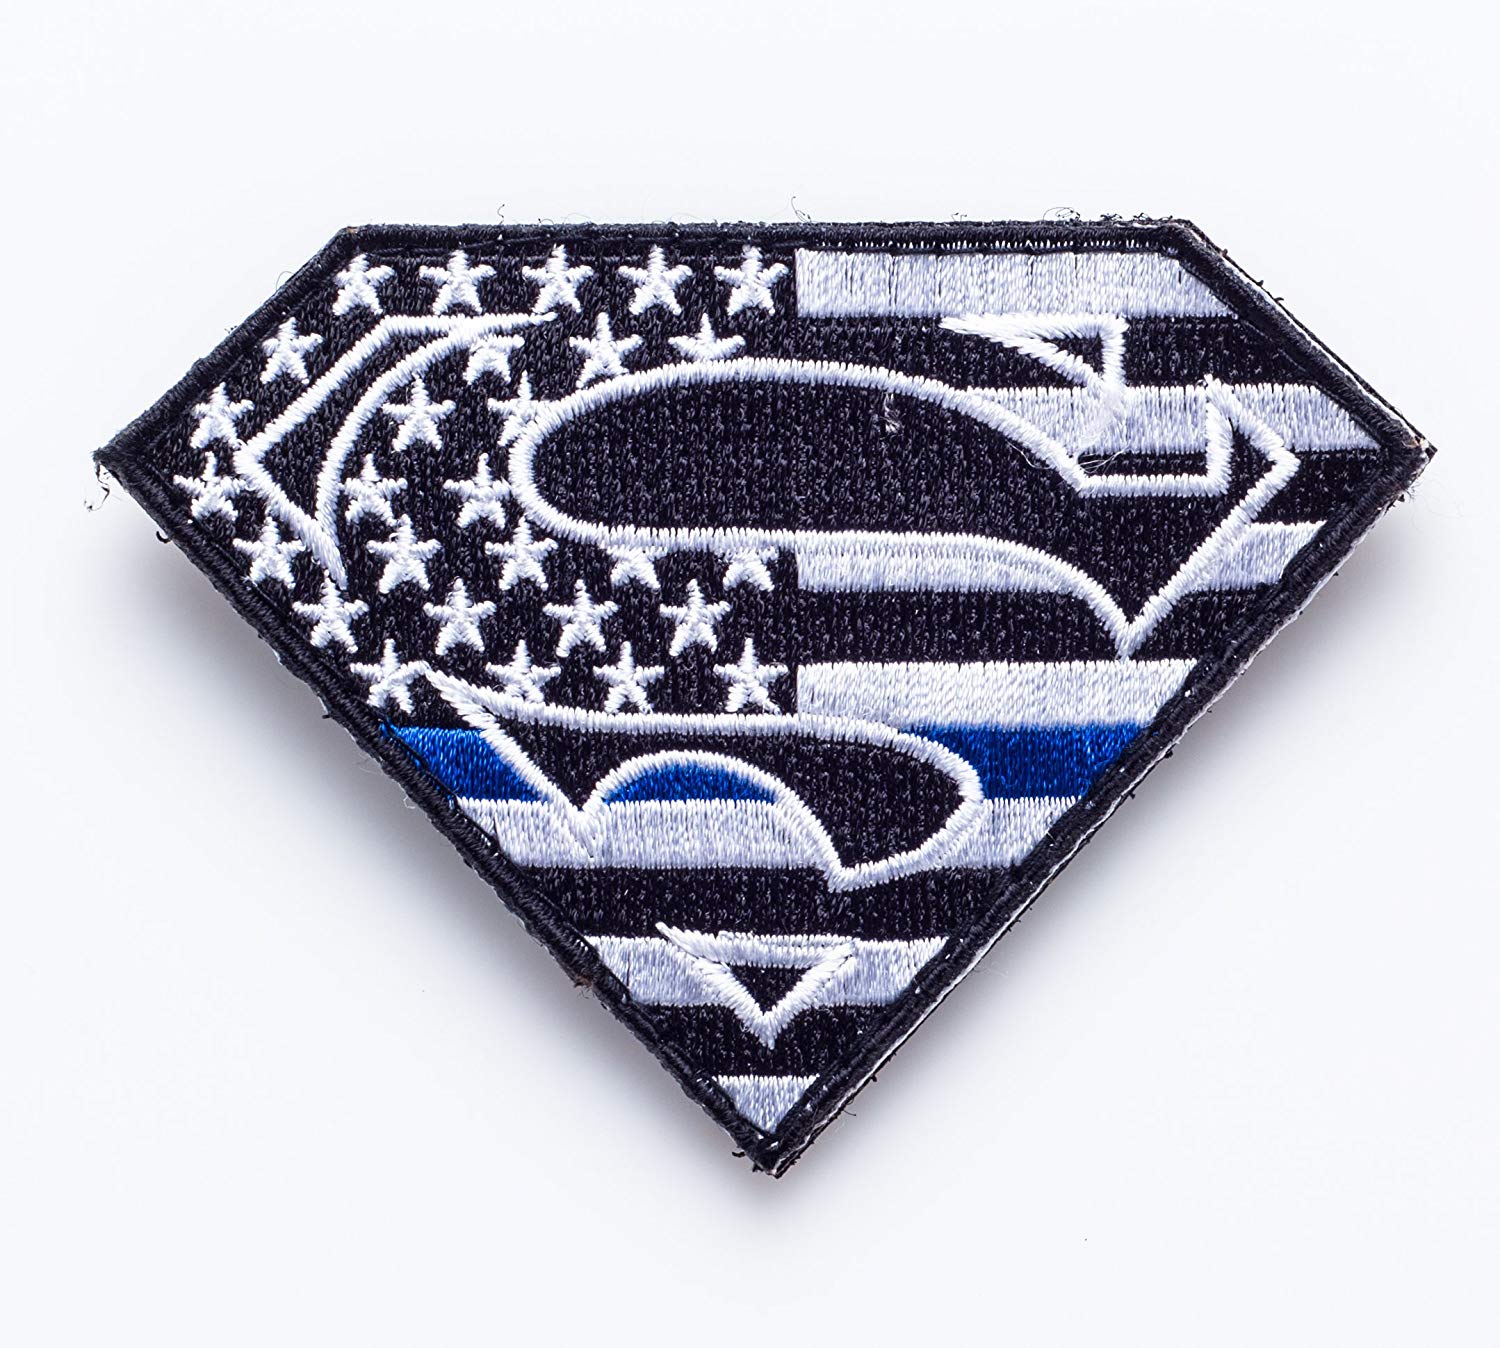 Batman Thin Blue Line Logo - Amazon.com: Police Thin Blue Line Batman Patch: Arts, Crafts & Sewing